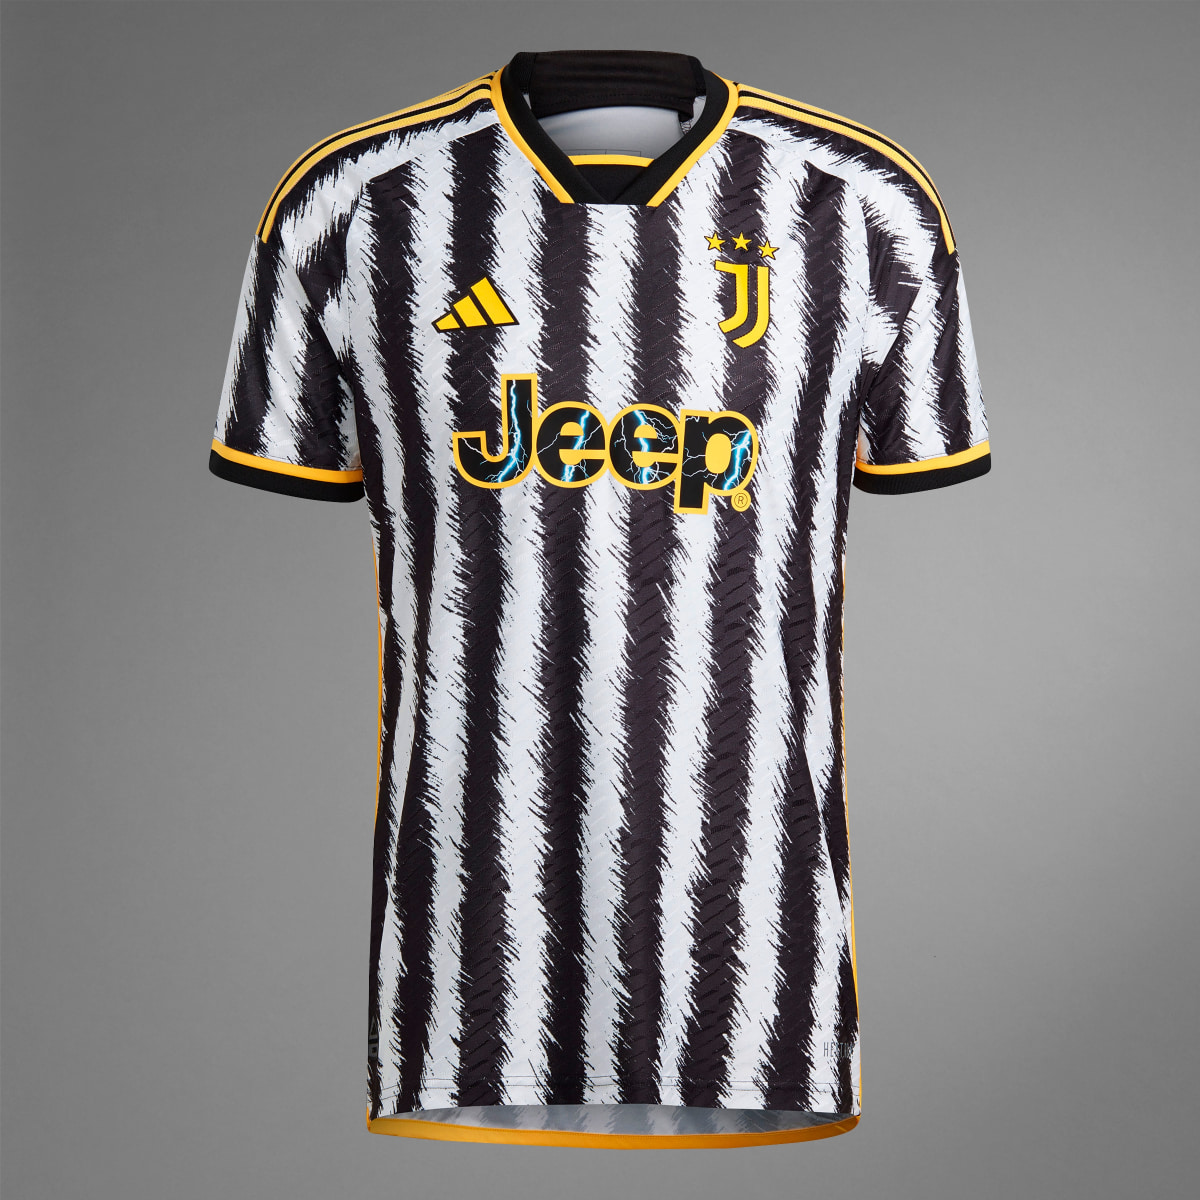 Adidas Camisola Principal Oficial 23/24 da Juventus. 5